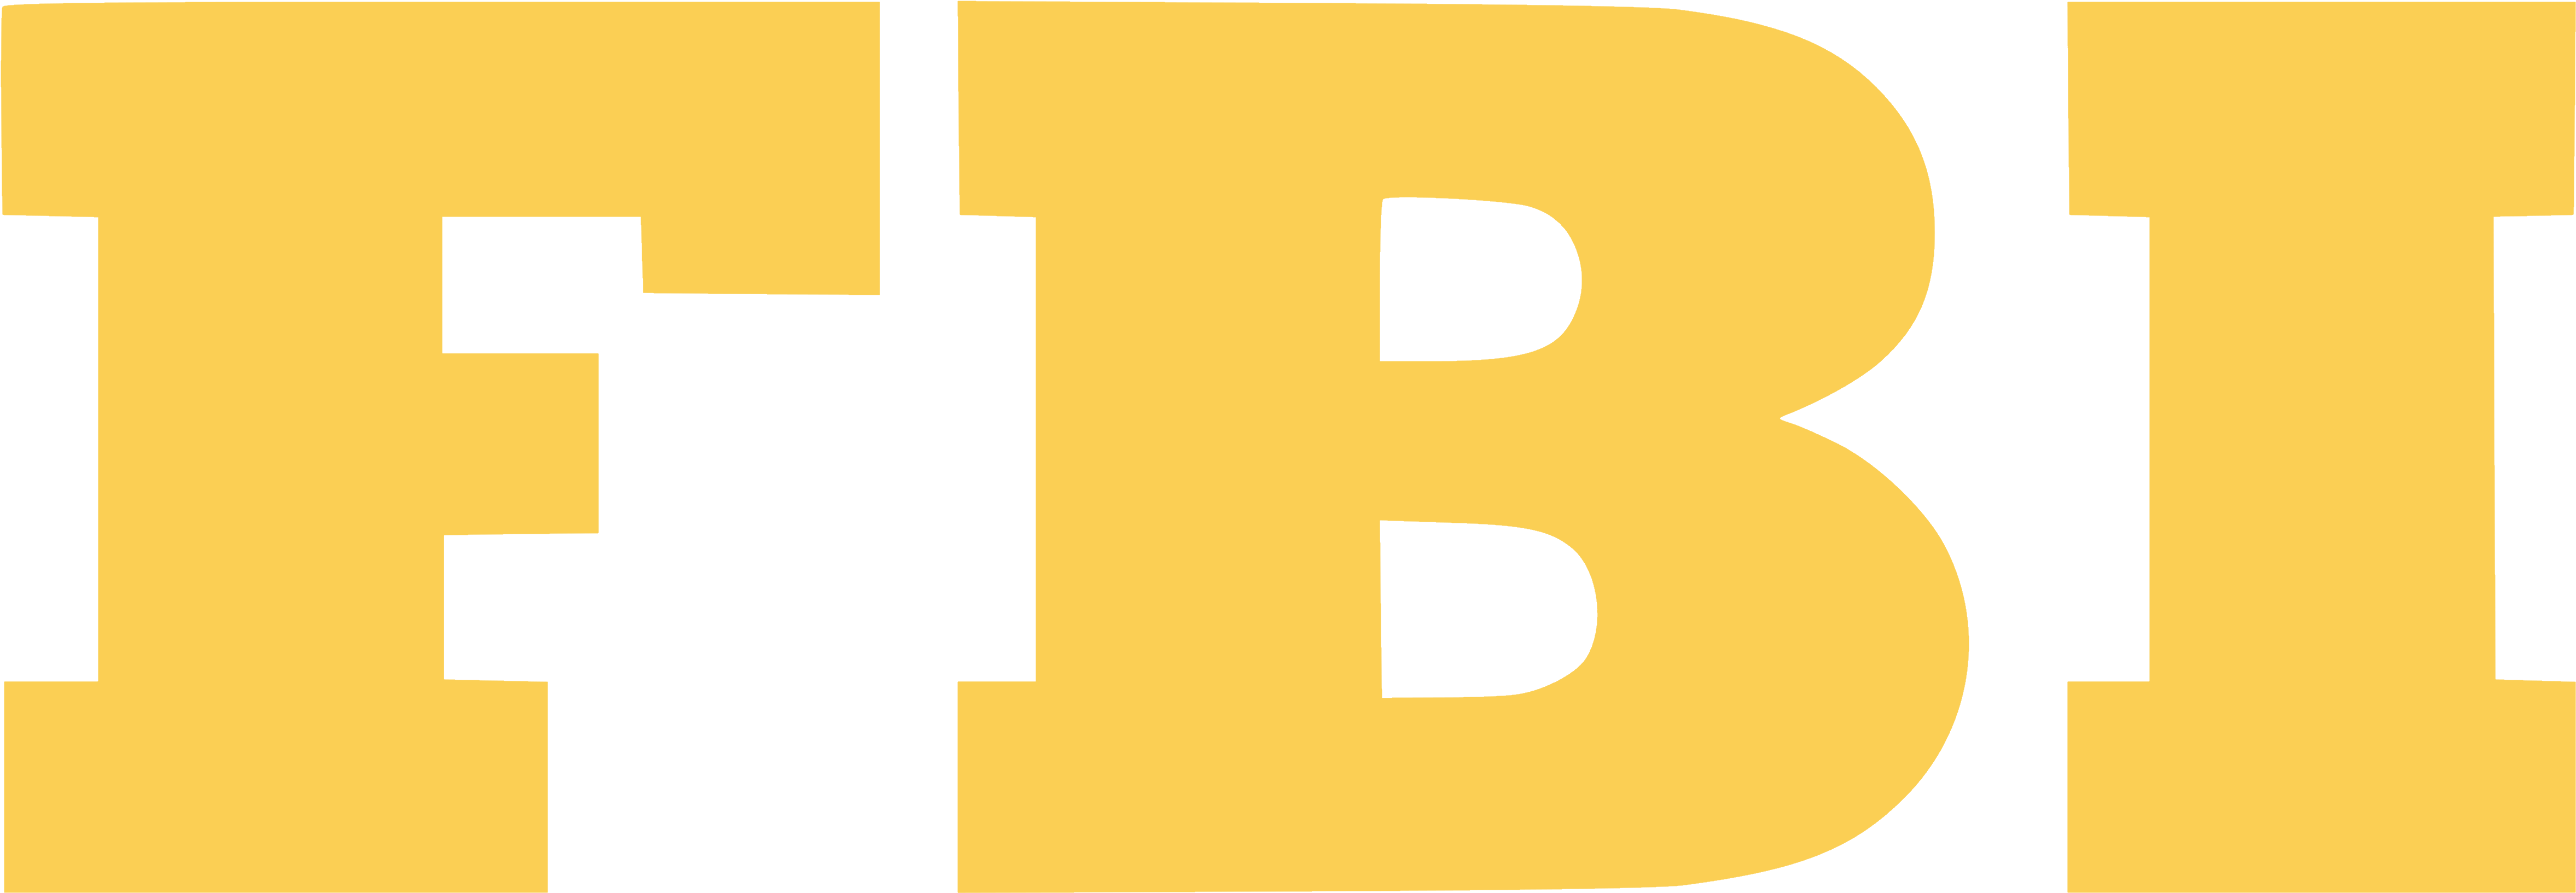 Download Fbi Fbi Logo Png Png Image With No Background Pngkey Com